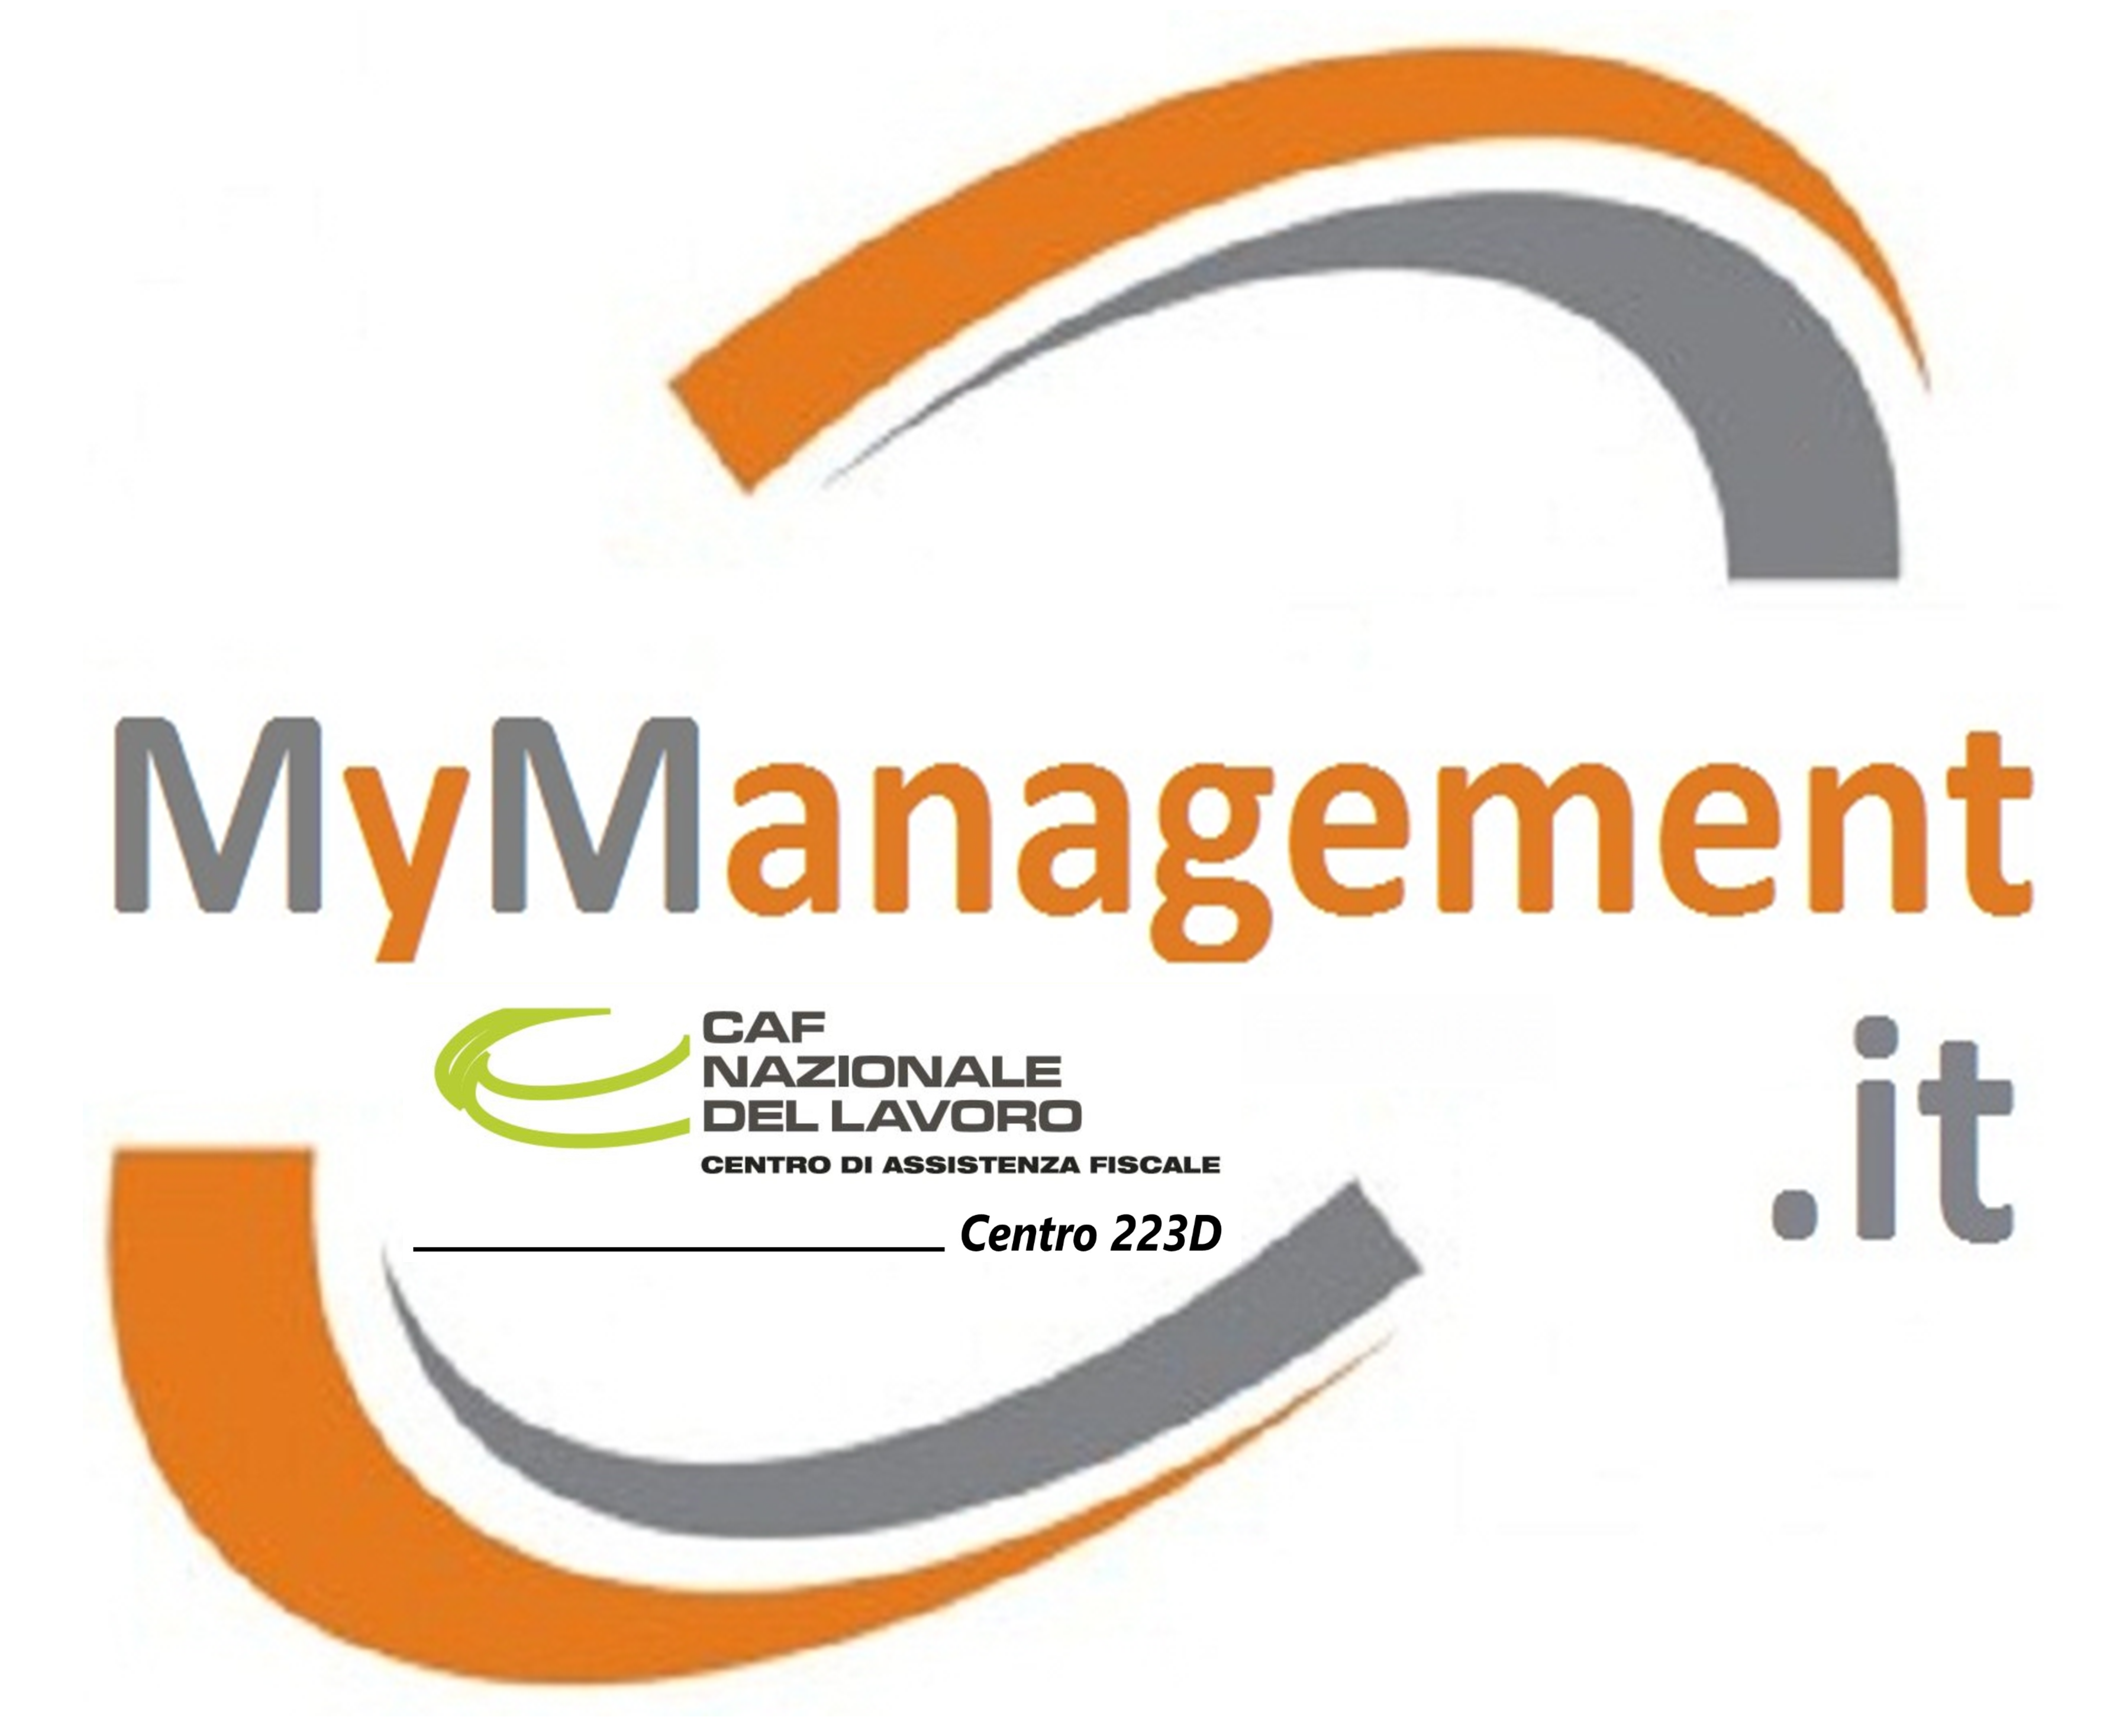 MyManagement – Contabilità, Caf, Privacy e assistenza digitale a Catania e Valguarnera